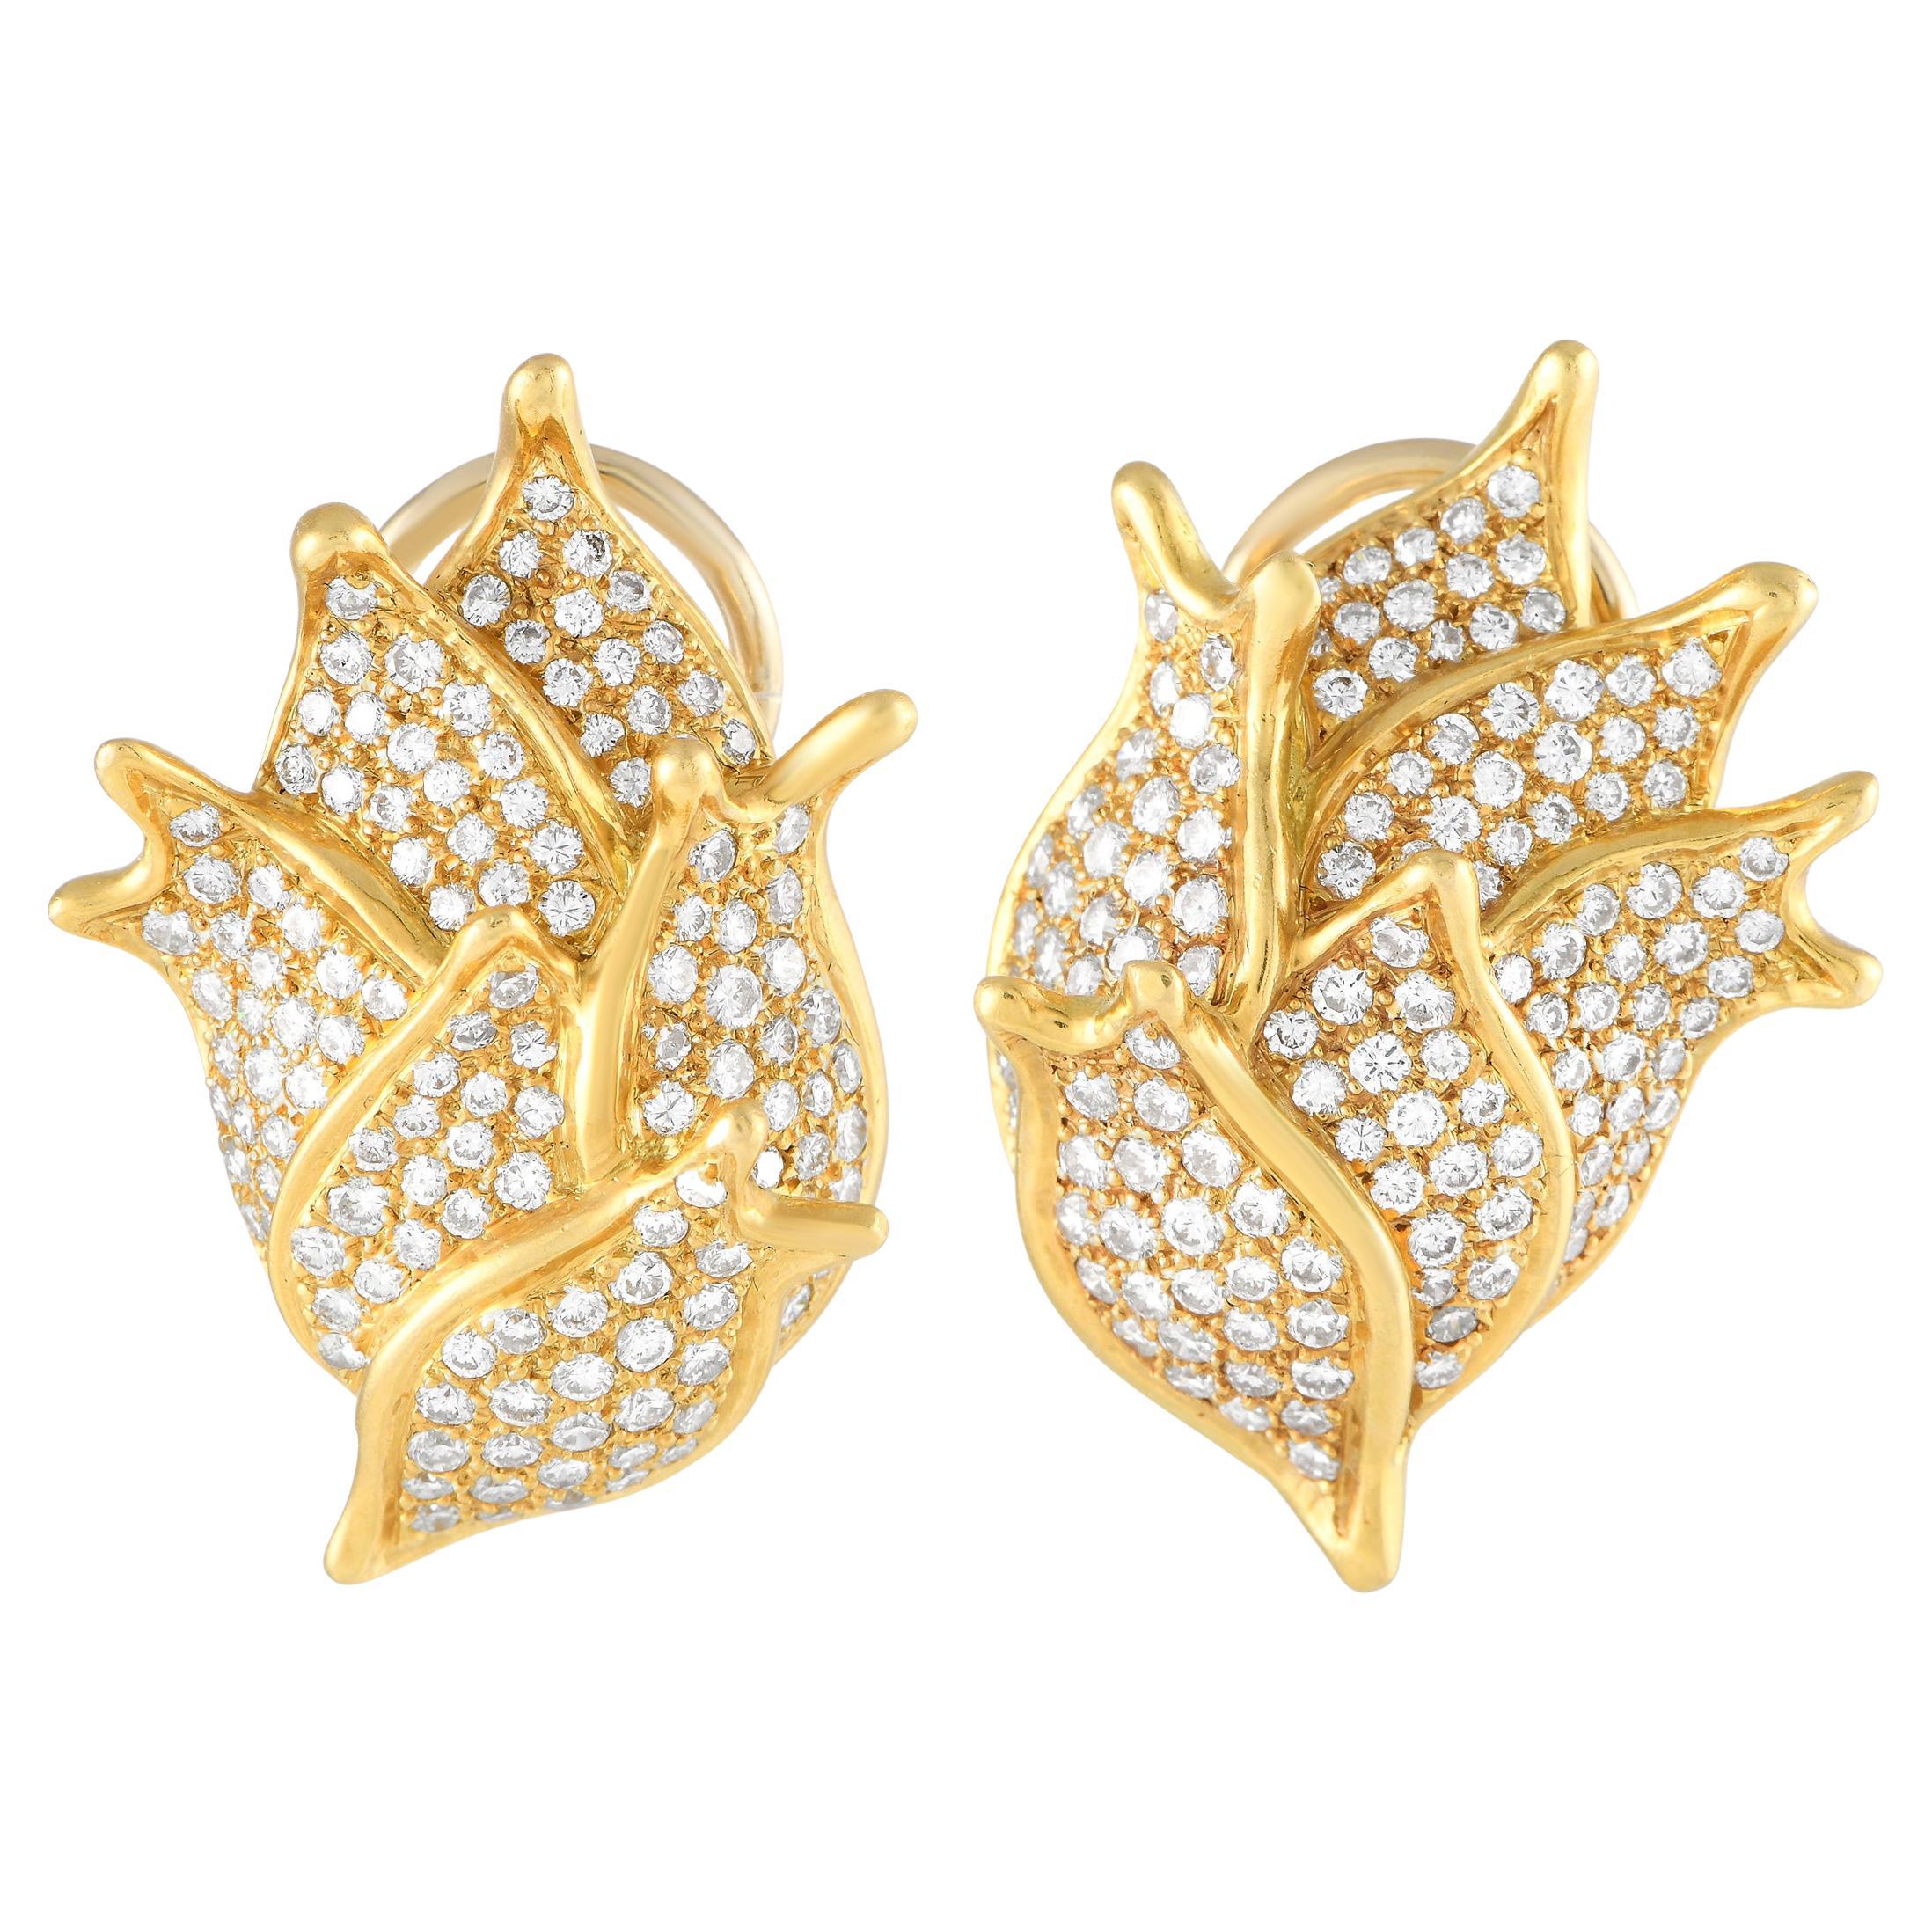 Angela Cummings 18K Yellow Gold 4.0ct Diamond Earrings